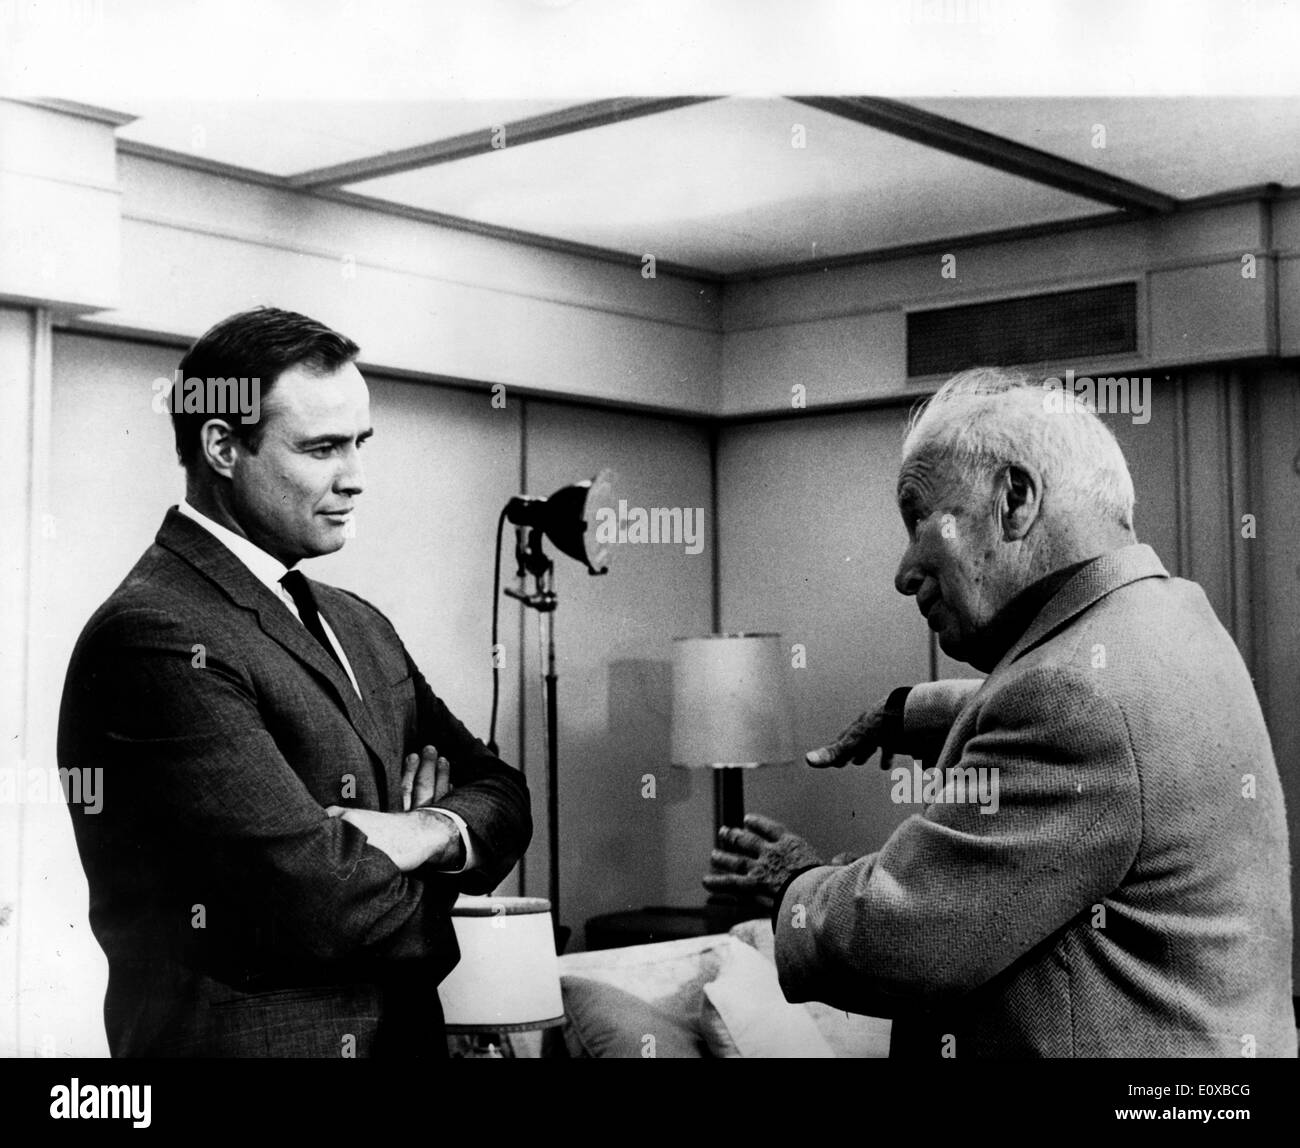 Marlon Brando talking to director Charlie Chaplin on set Stock Photo - Alamy